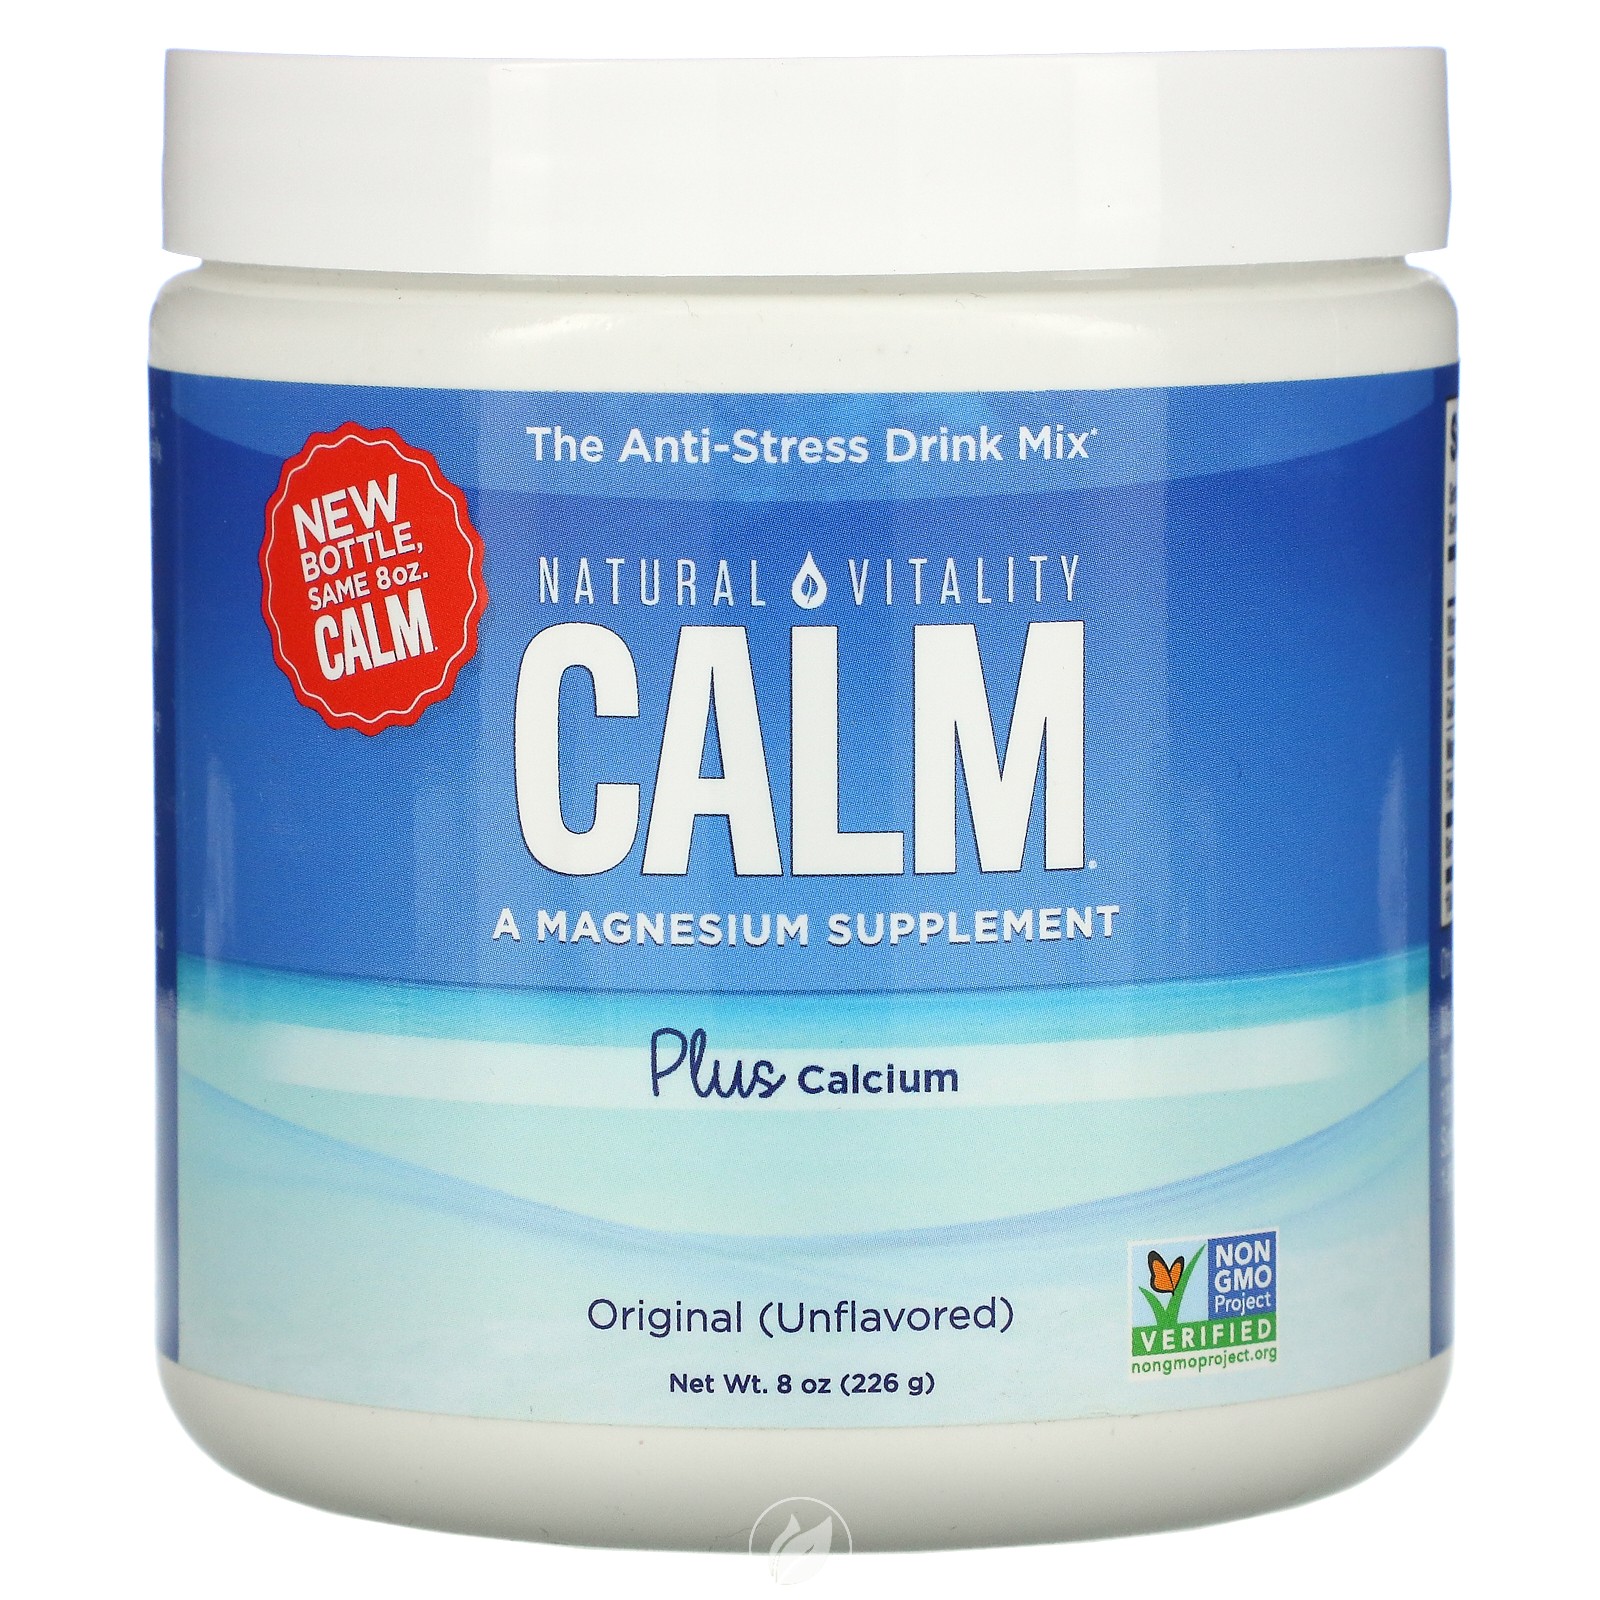 Natural Vitality, Calm, The Anti-Stress Drink Mix Plus Calcium, Original (Unflavored), 8 oz (226 g)